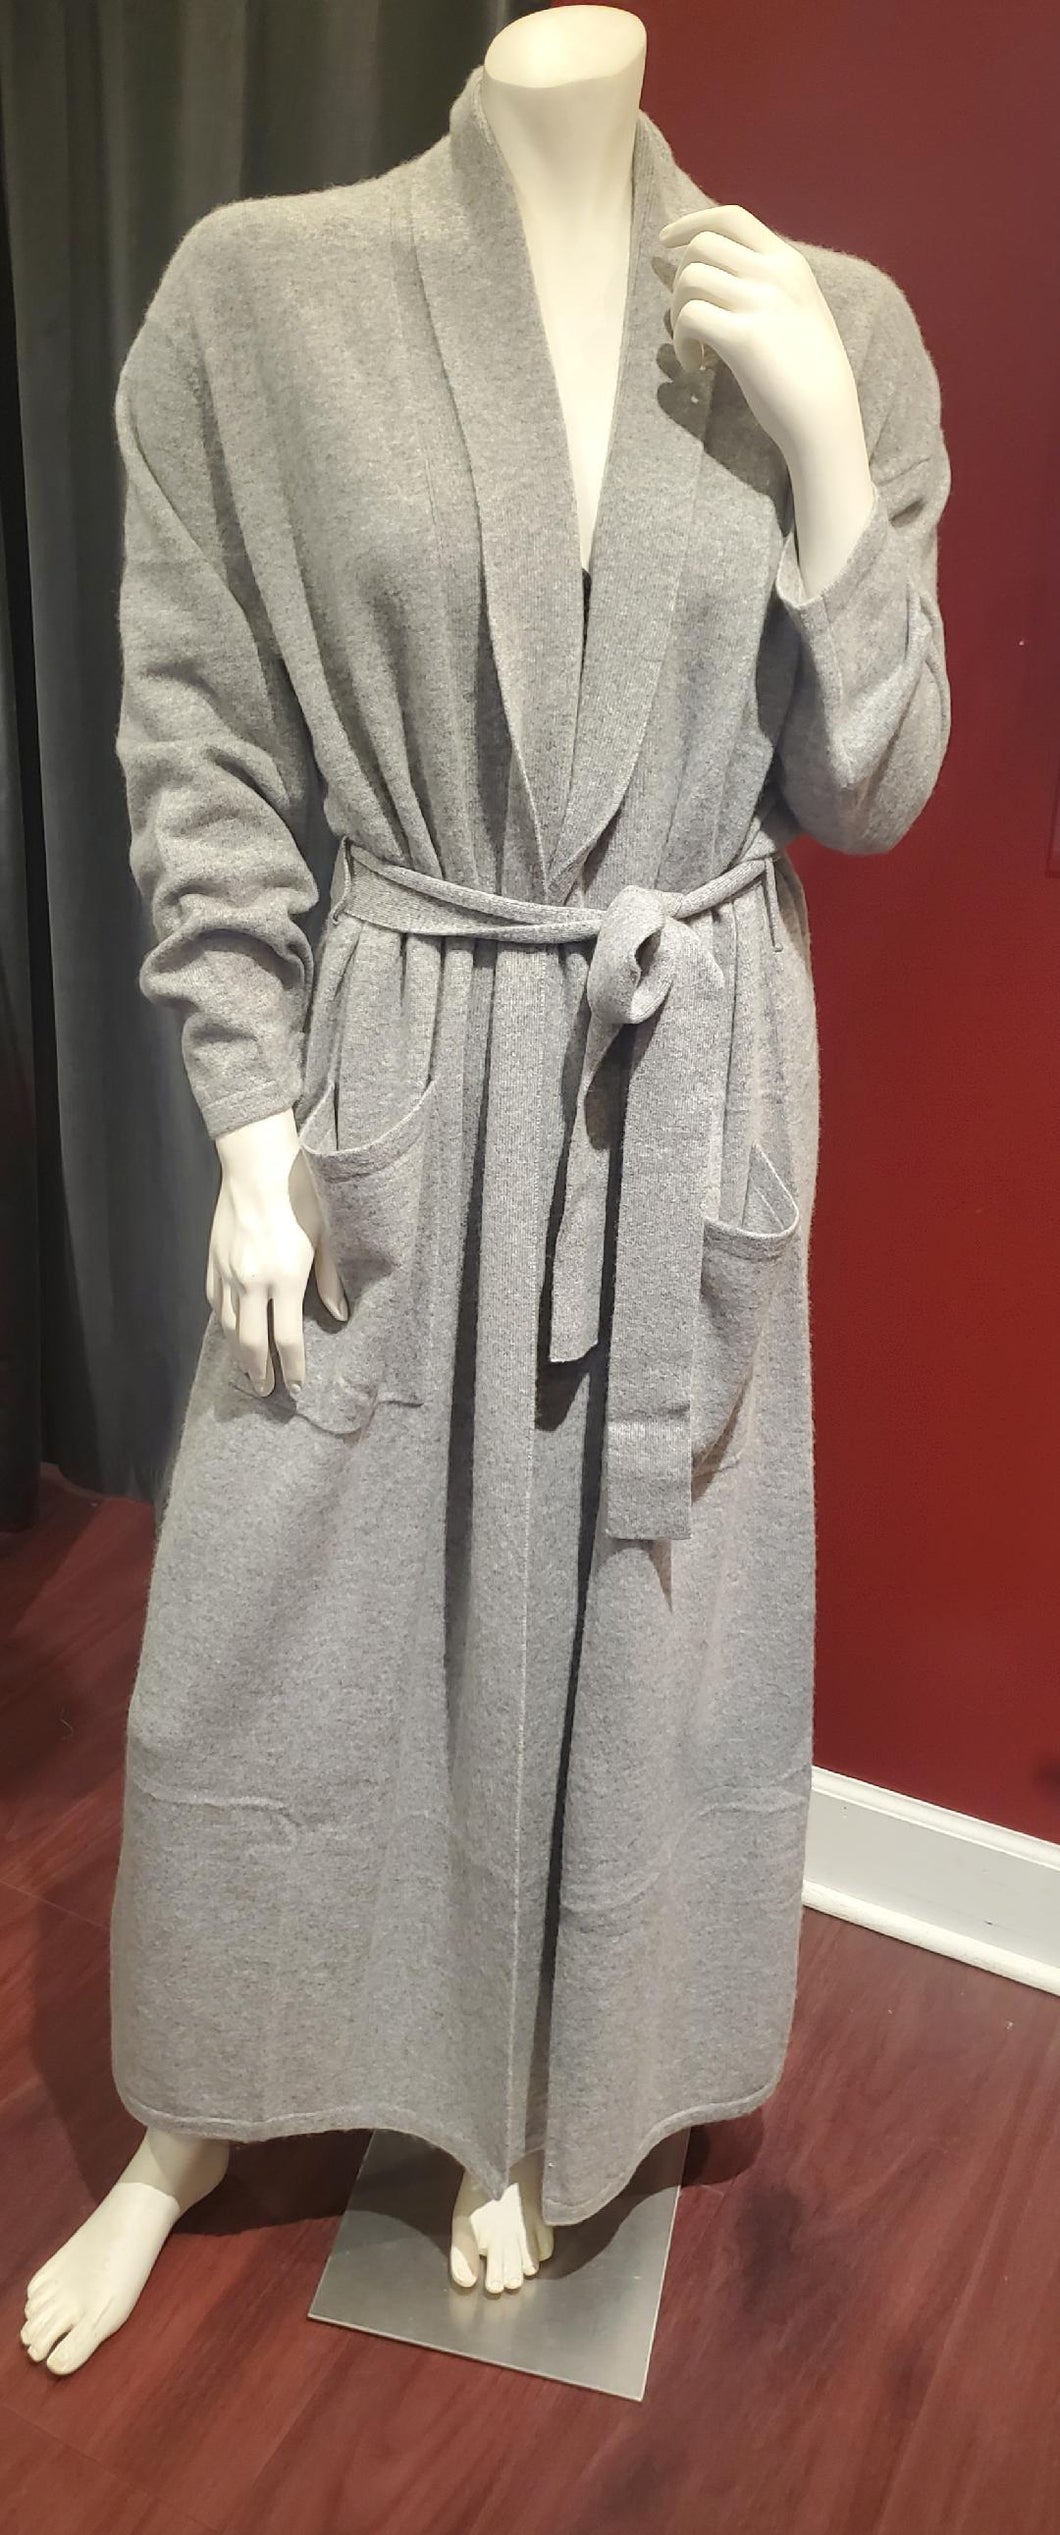 Arlotta Long Wrap Cashmere Robe (Multi Colors Available)